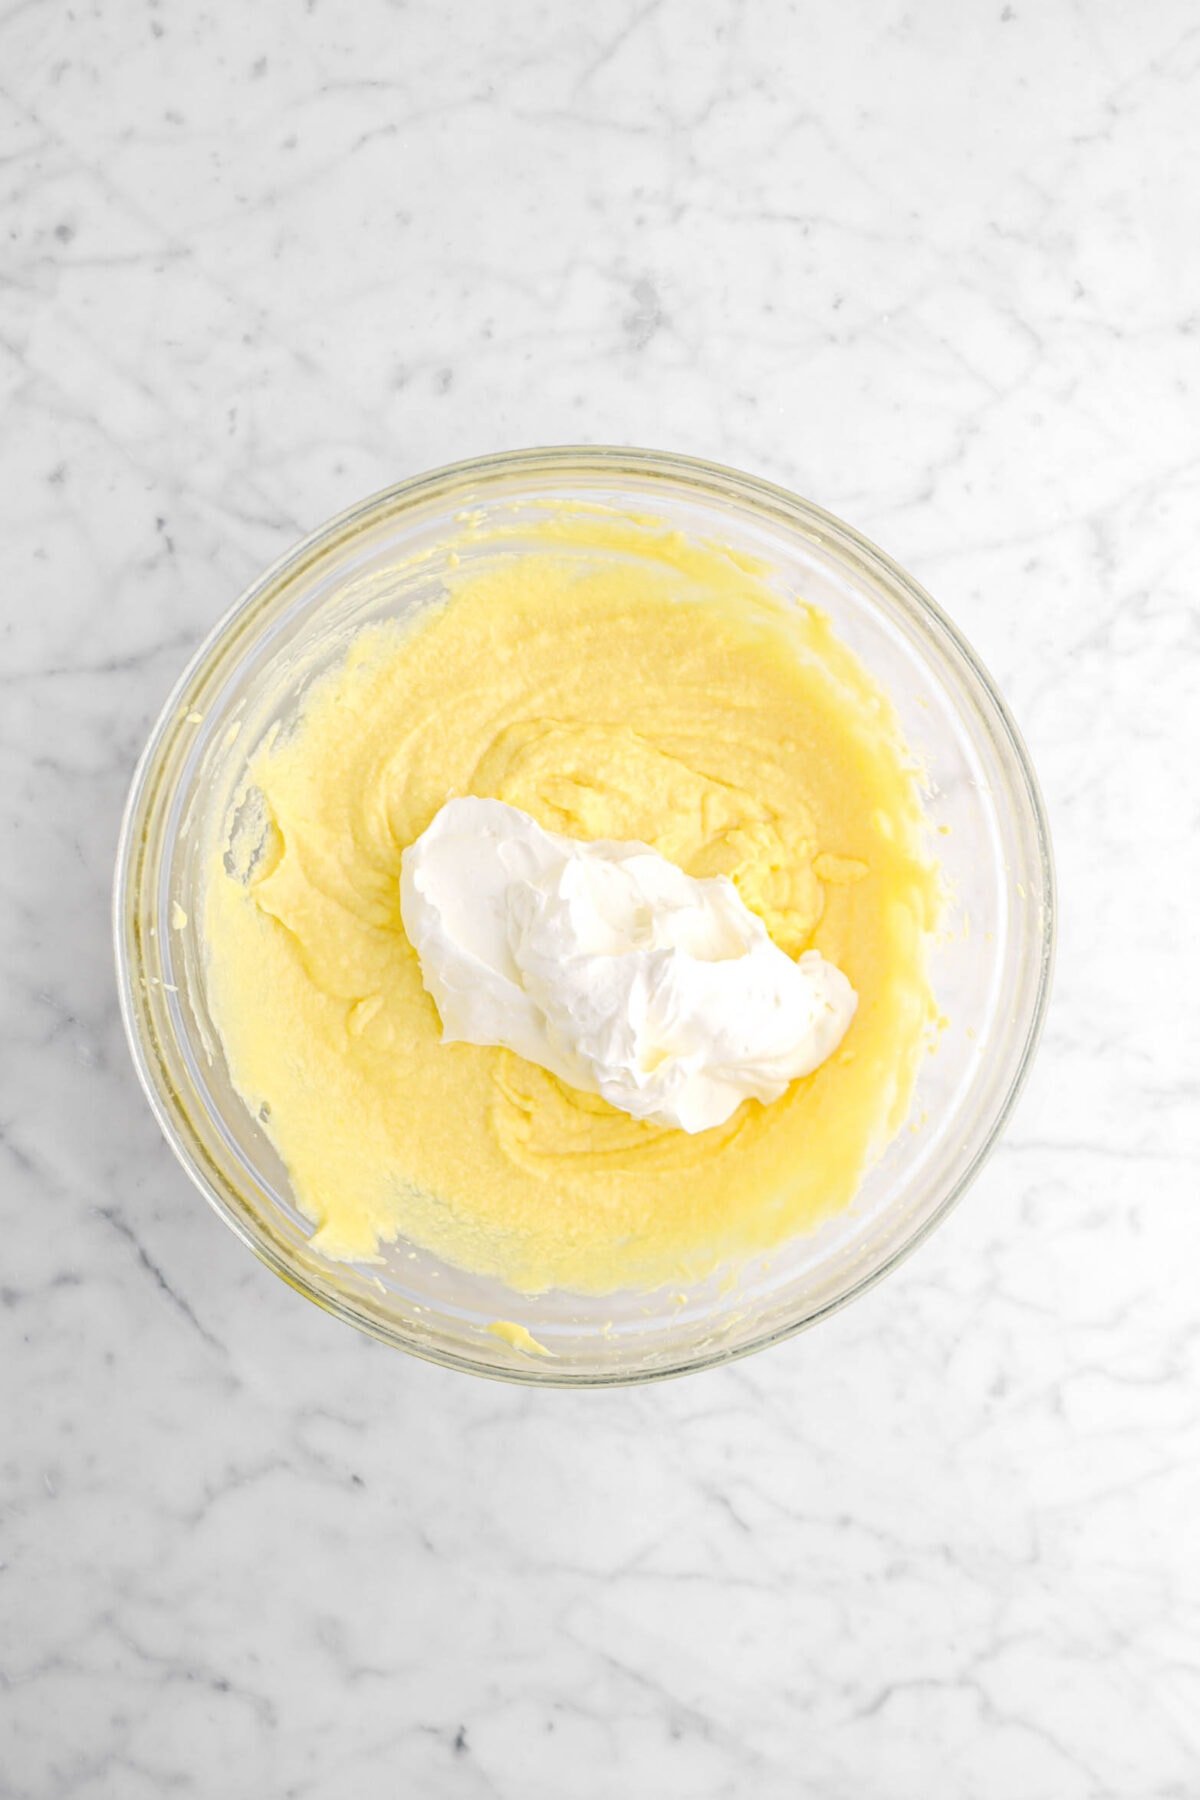 whipped cream added to mascarpone and egg yolk mixture